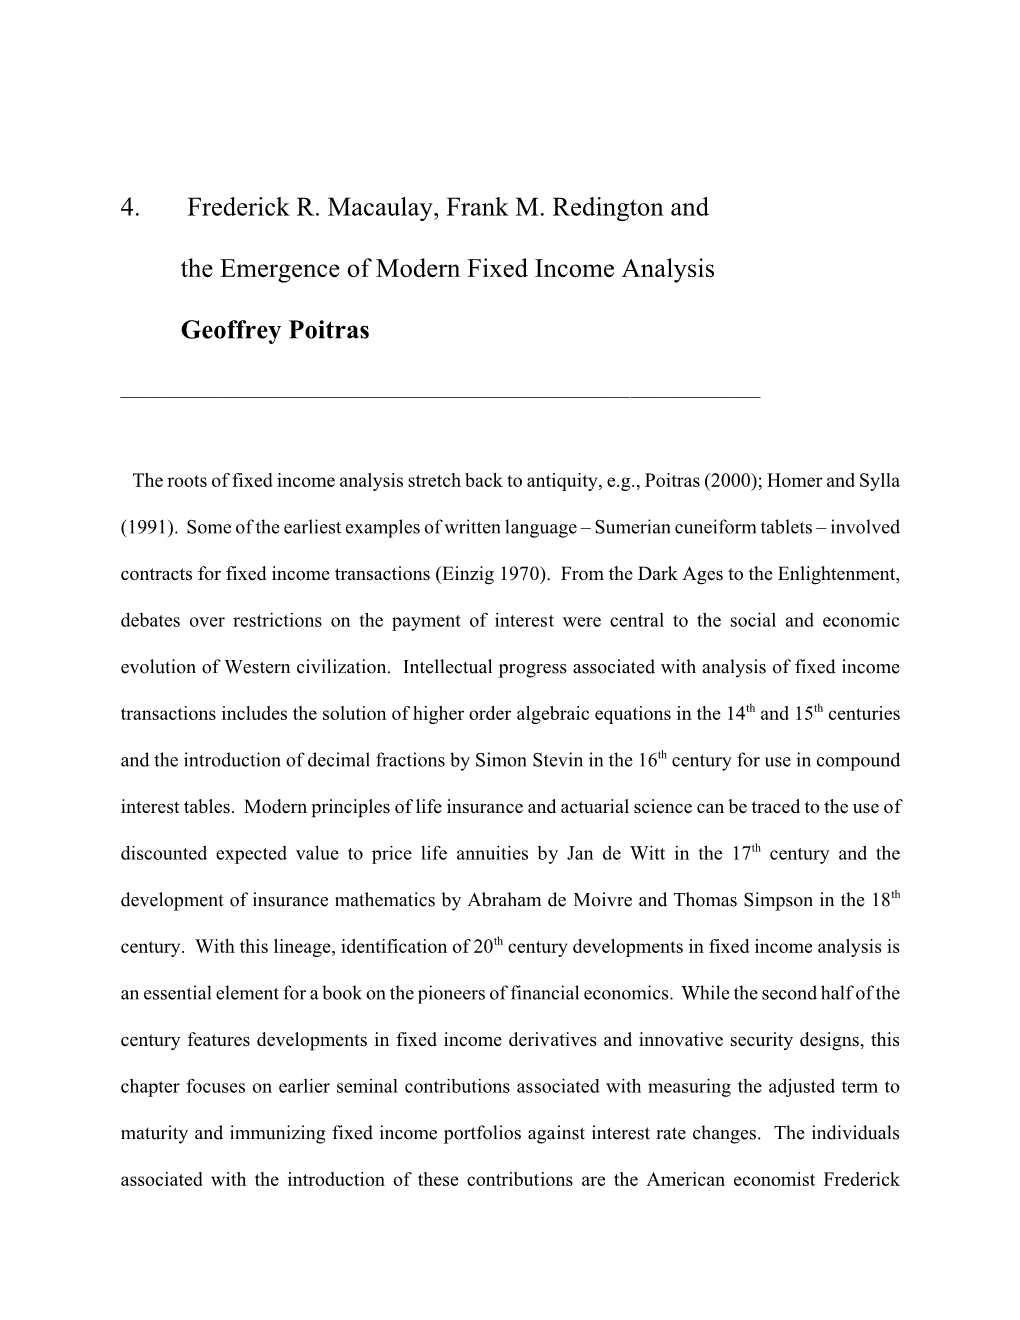 4. Frederick R. Macaulay, Frank M. Redington and the Emergence Of